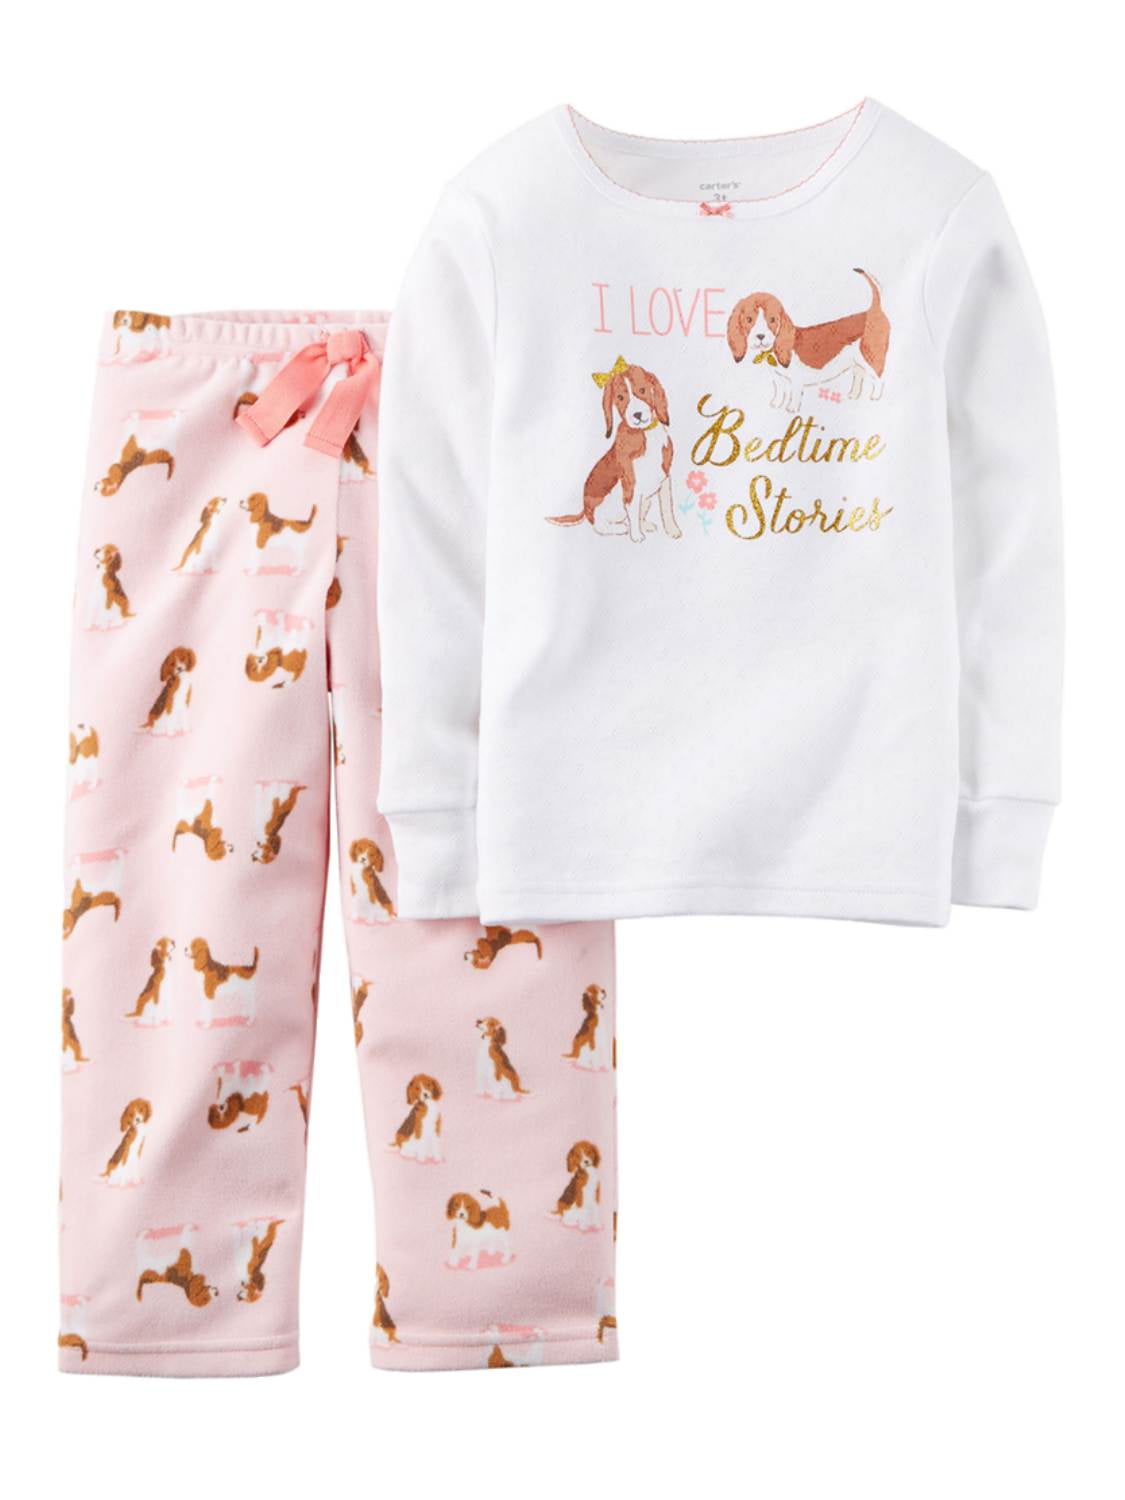 Boys and Girls Pajamas Doggy Set